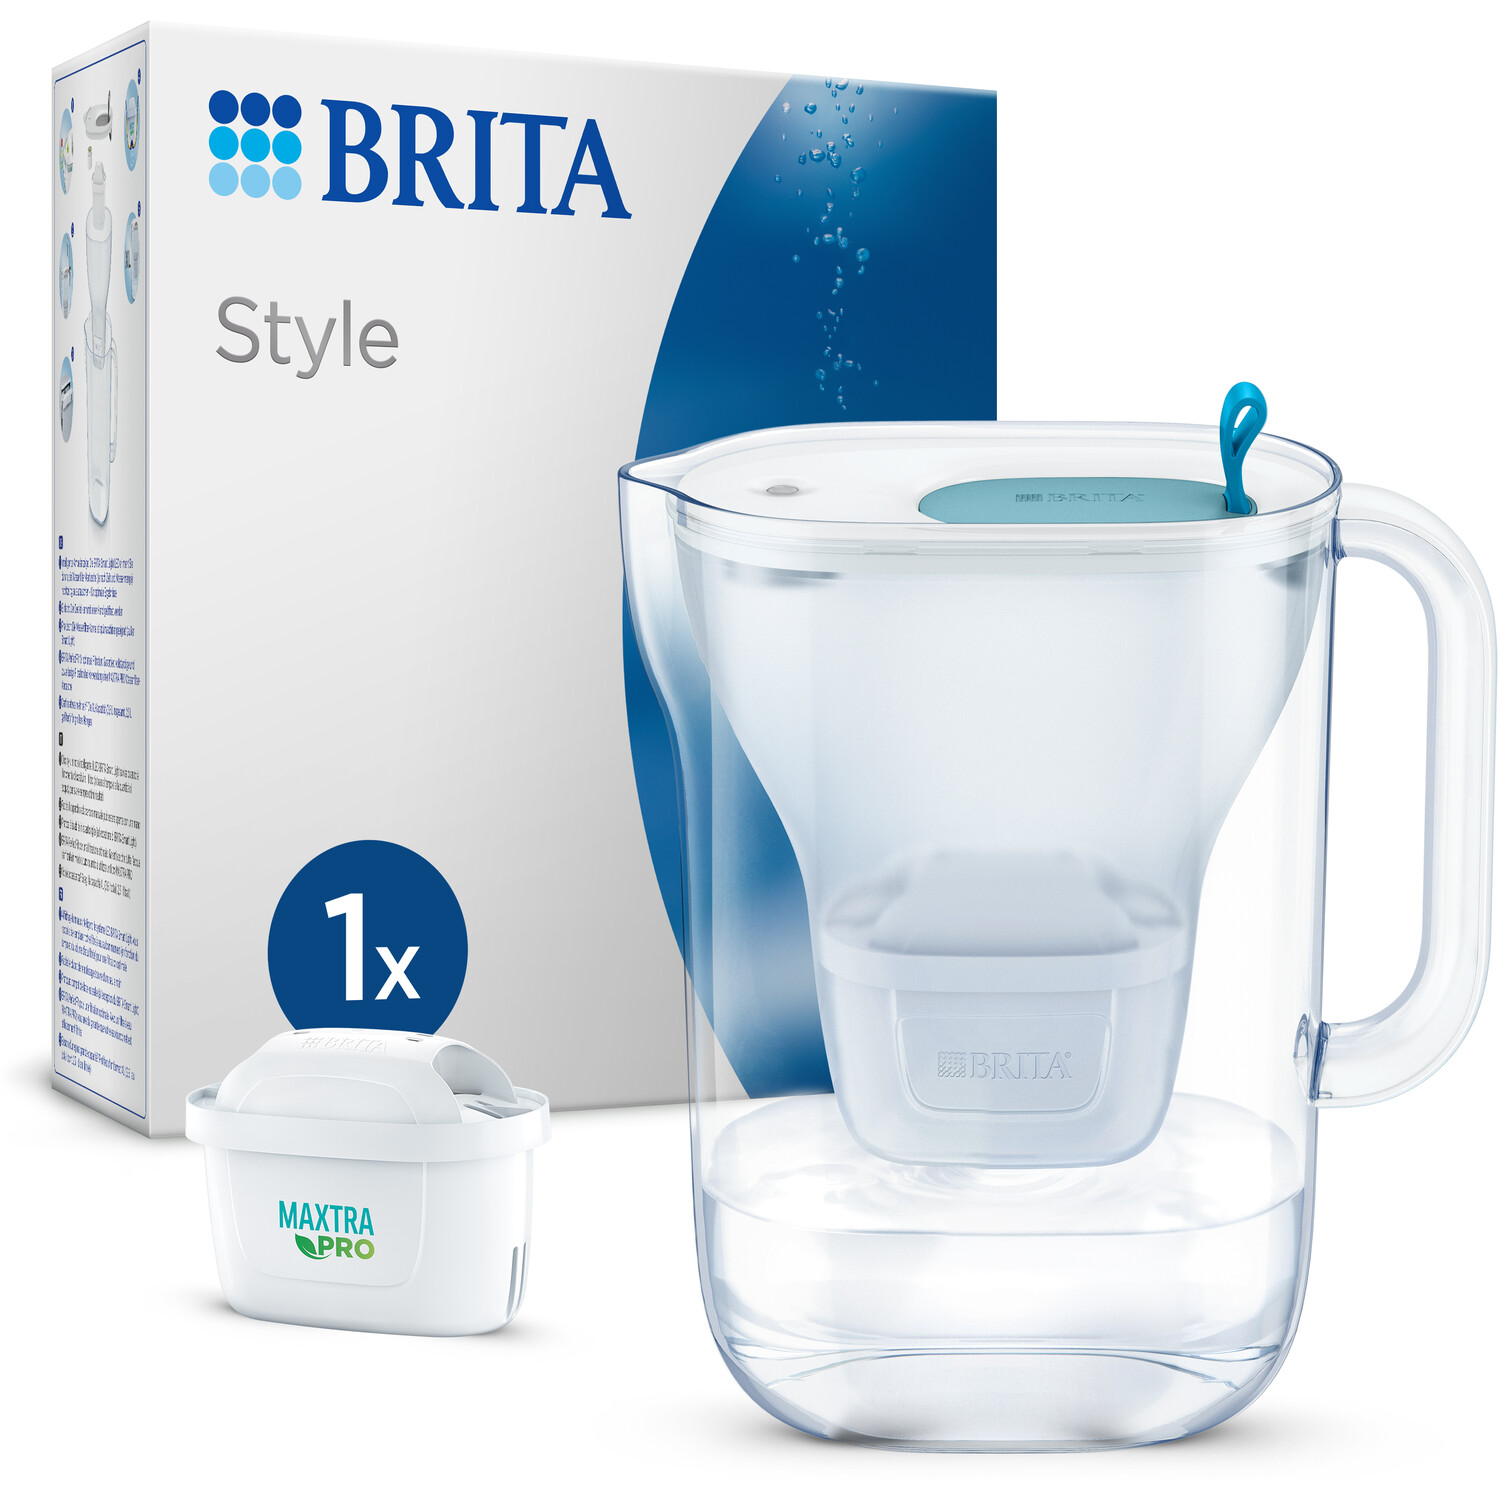 Brita Style 2.4L Water Filter Jug Image 1